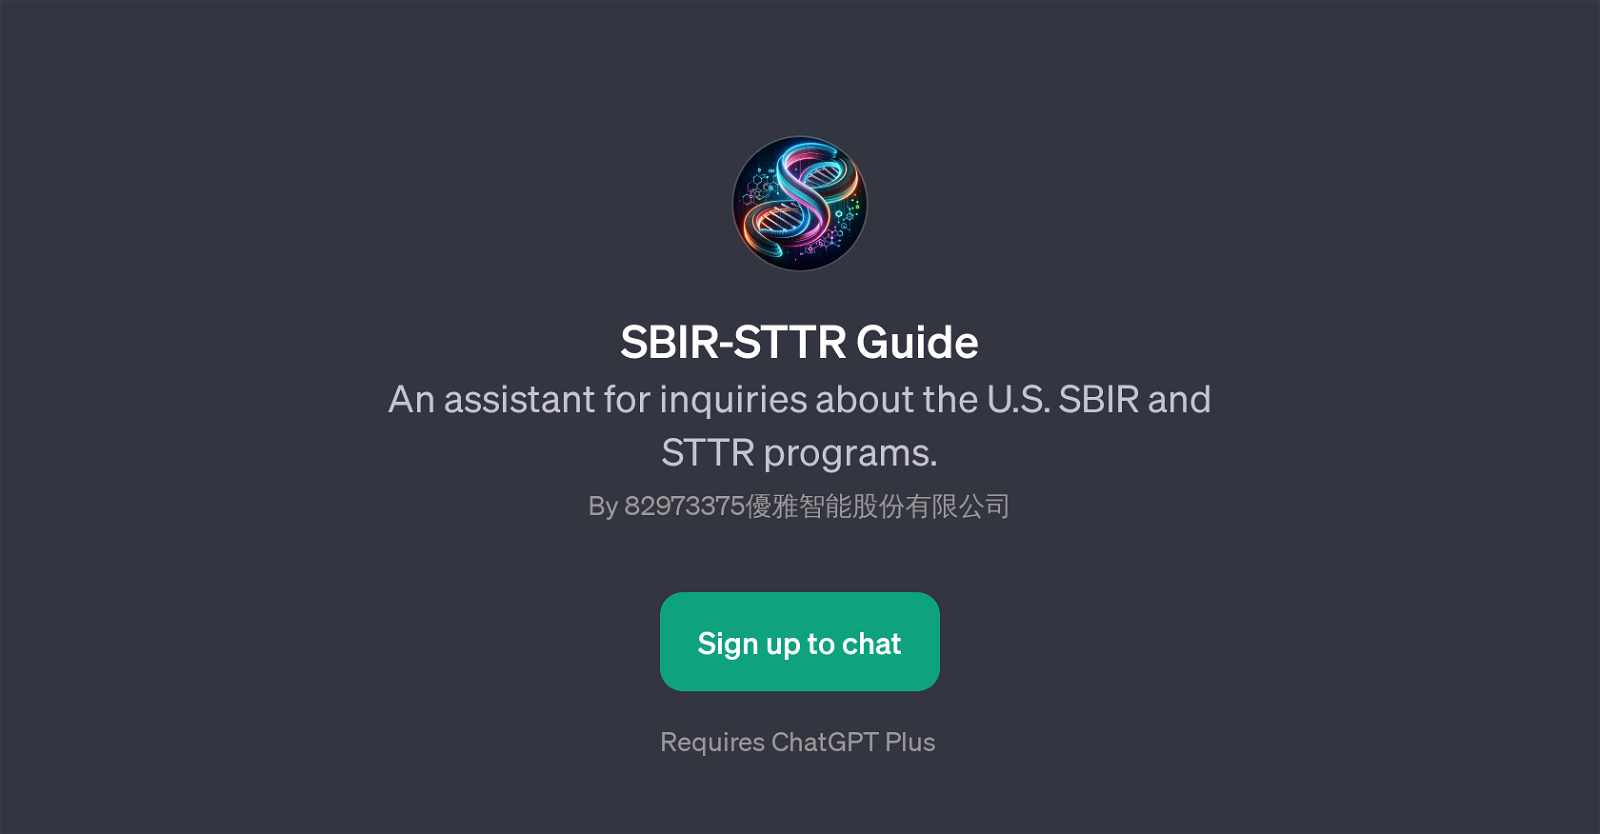 SBIR-STTR Guide website